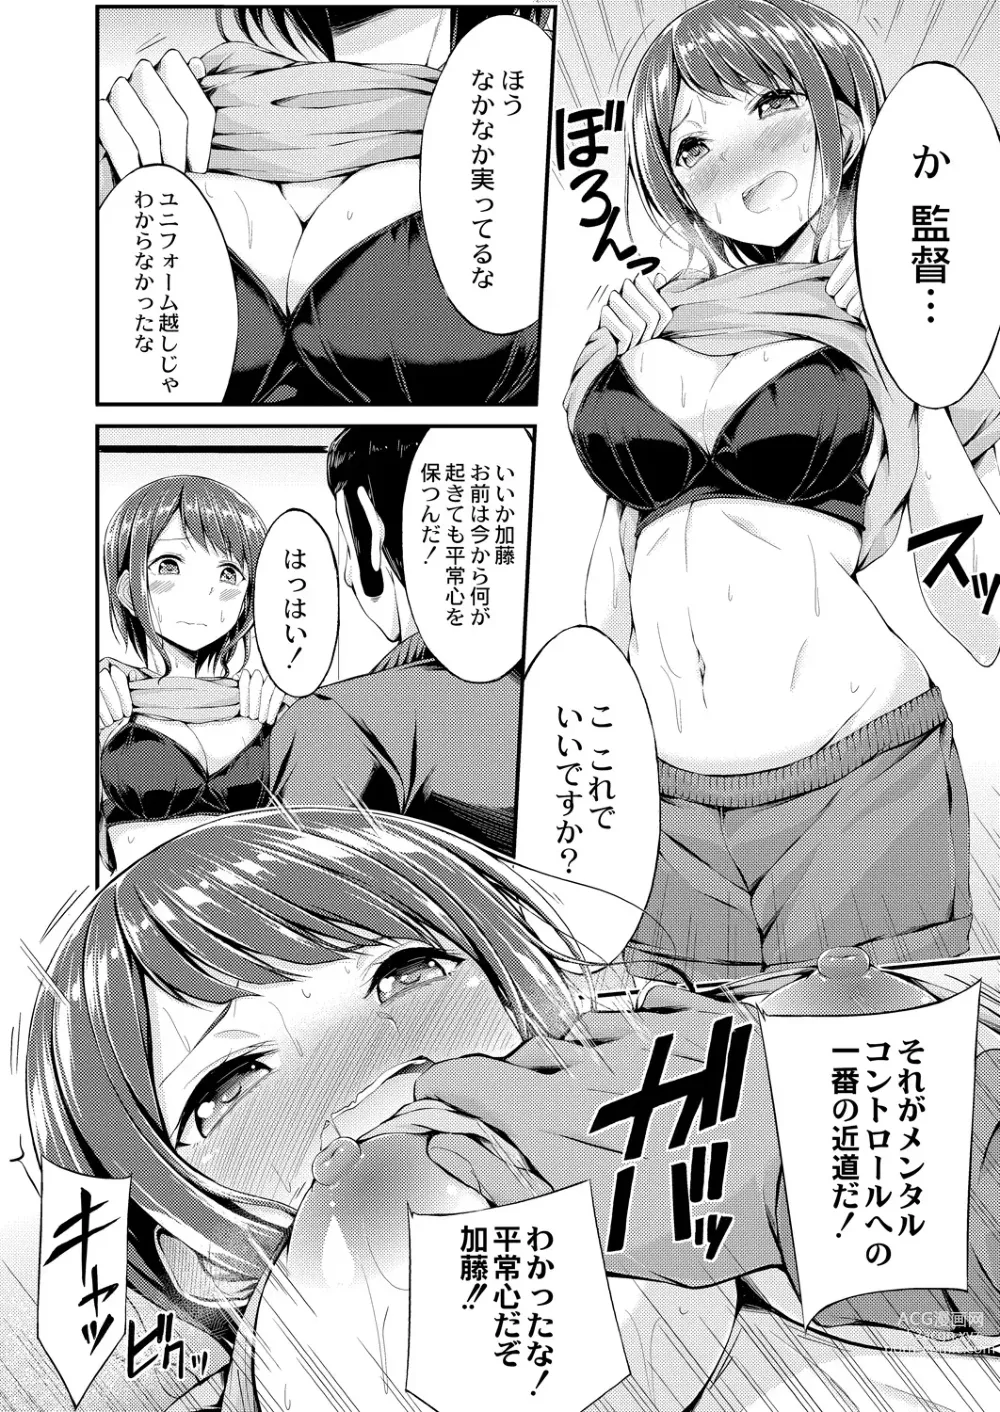 Page 8 of manga Bitch The Fxxk!